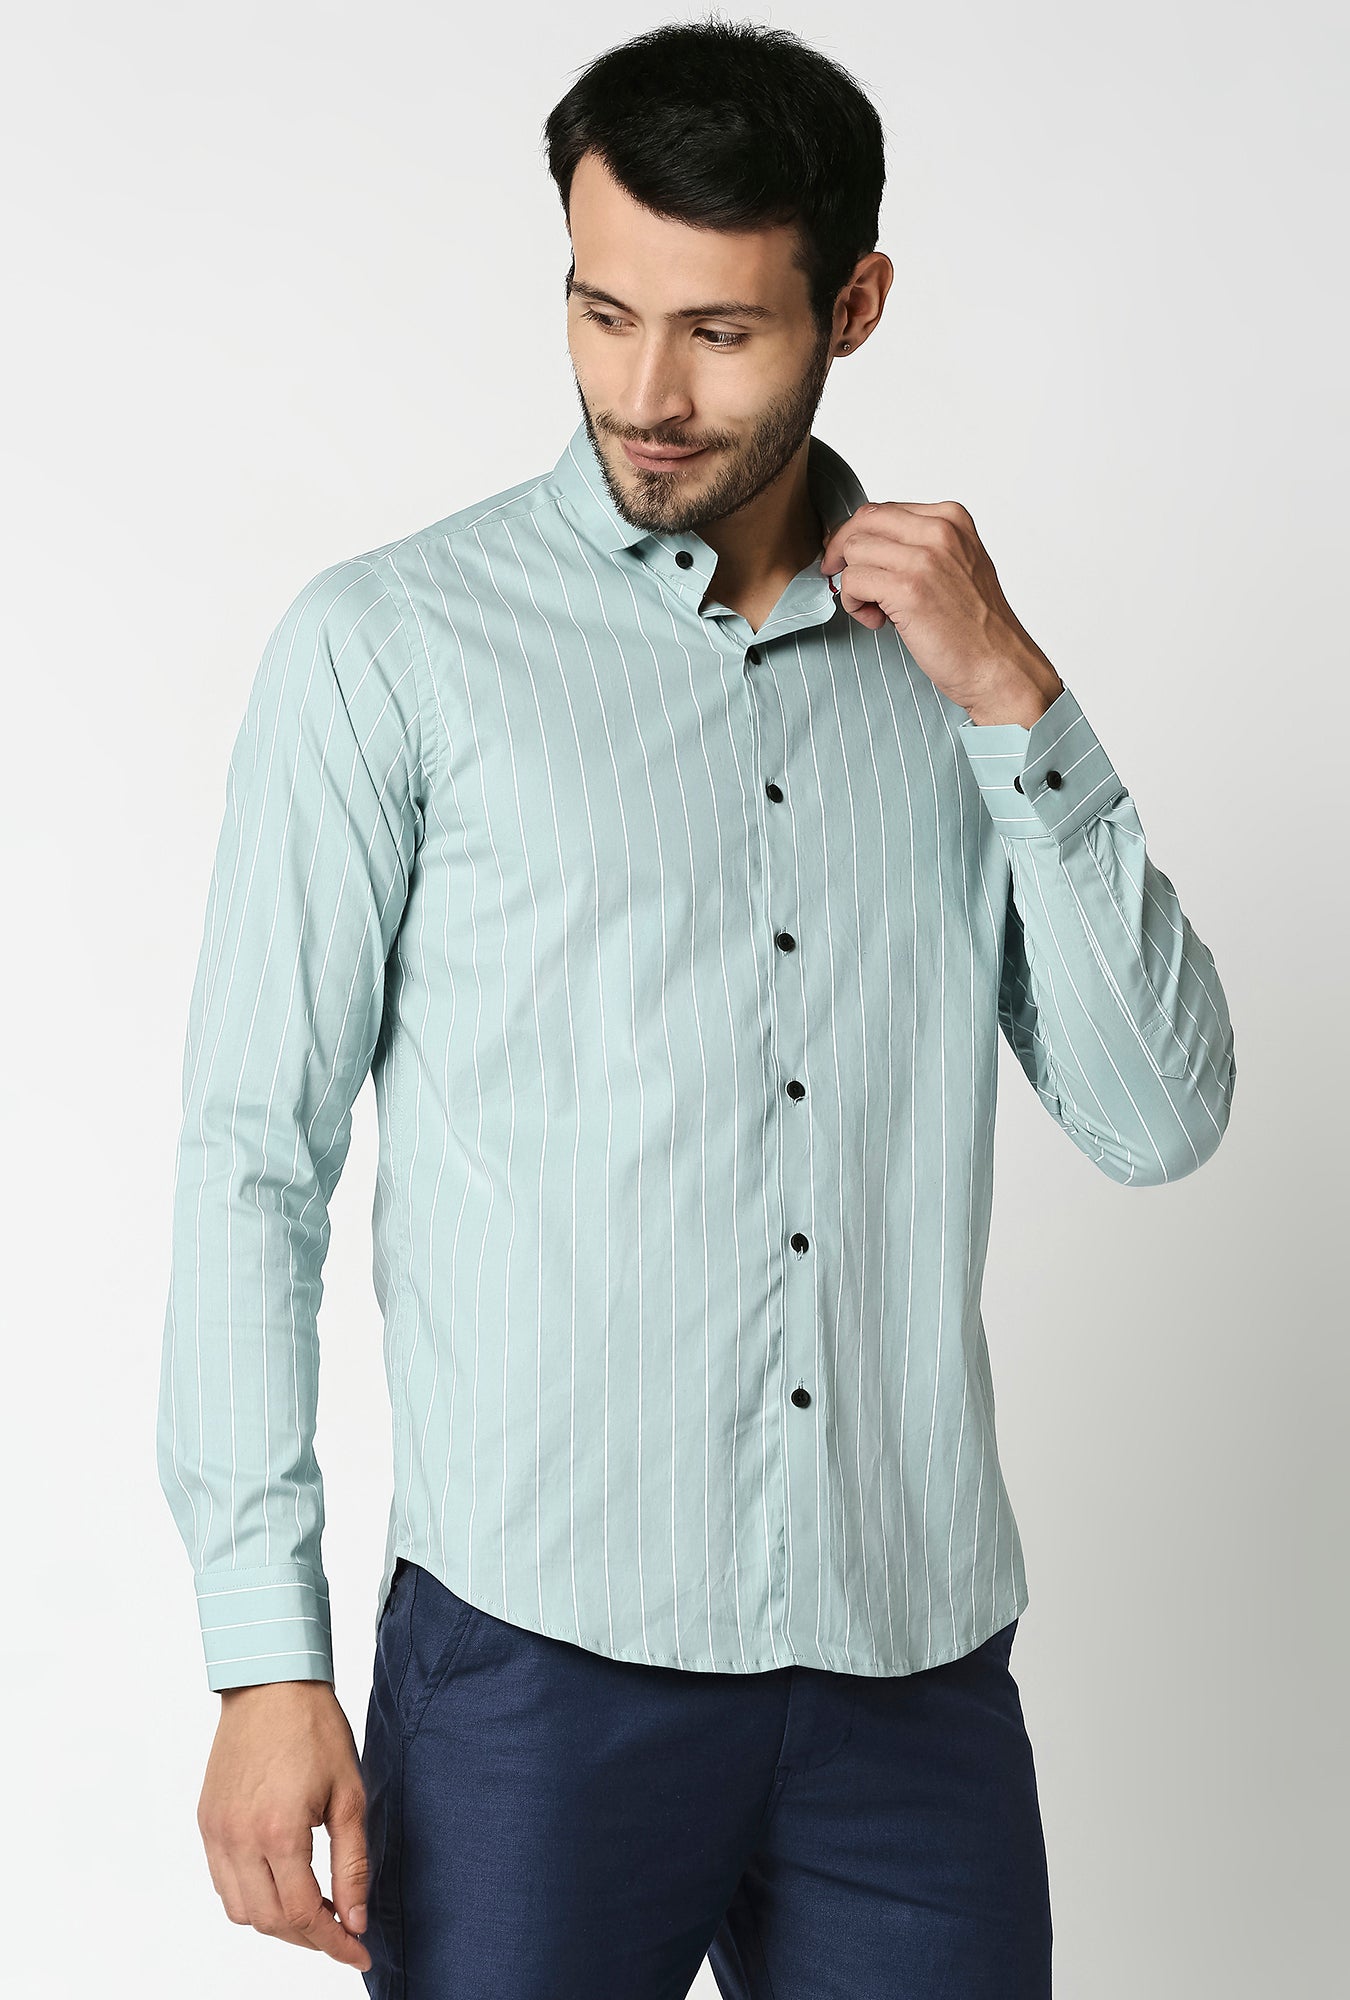 Fostino Stripes Pista Full Sleeves Shirt - Fostino - Shirts